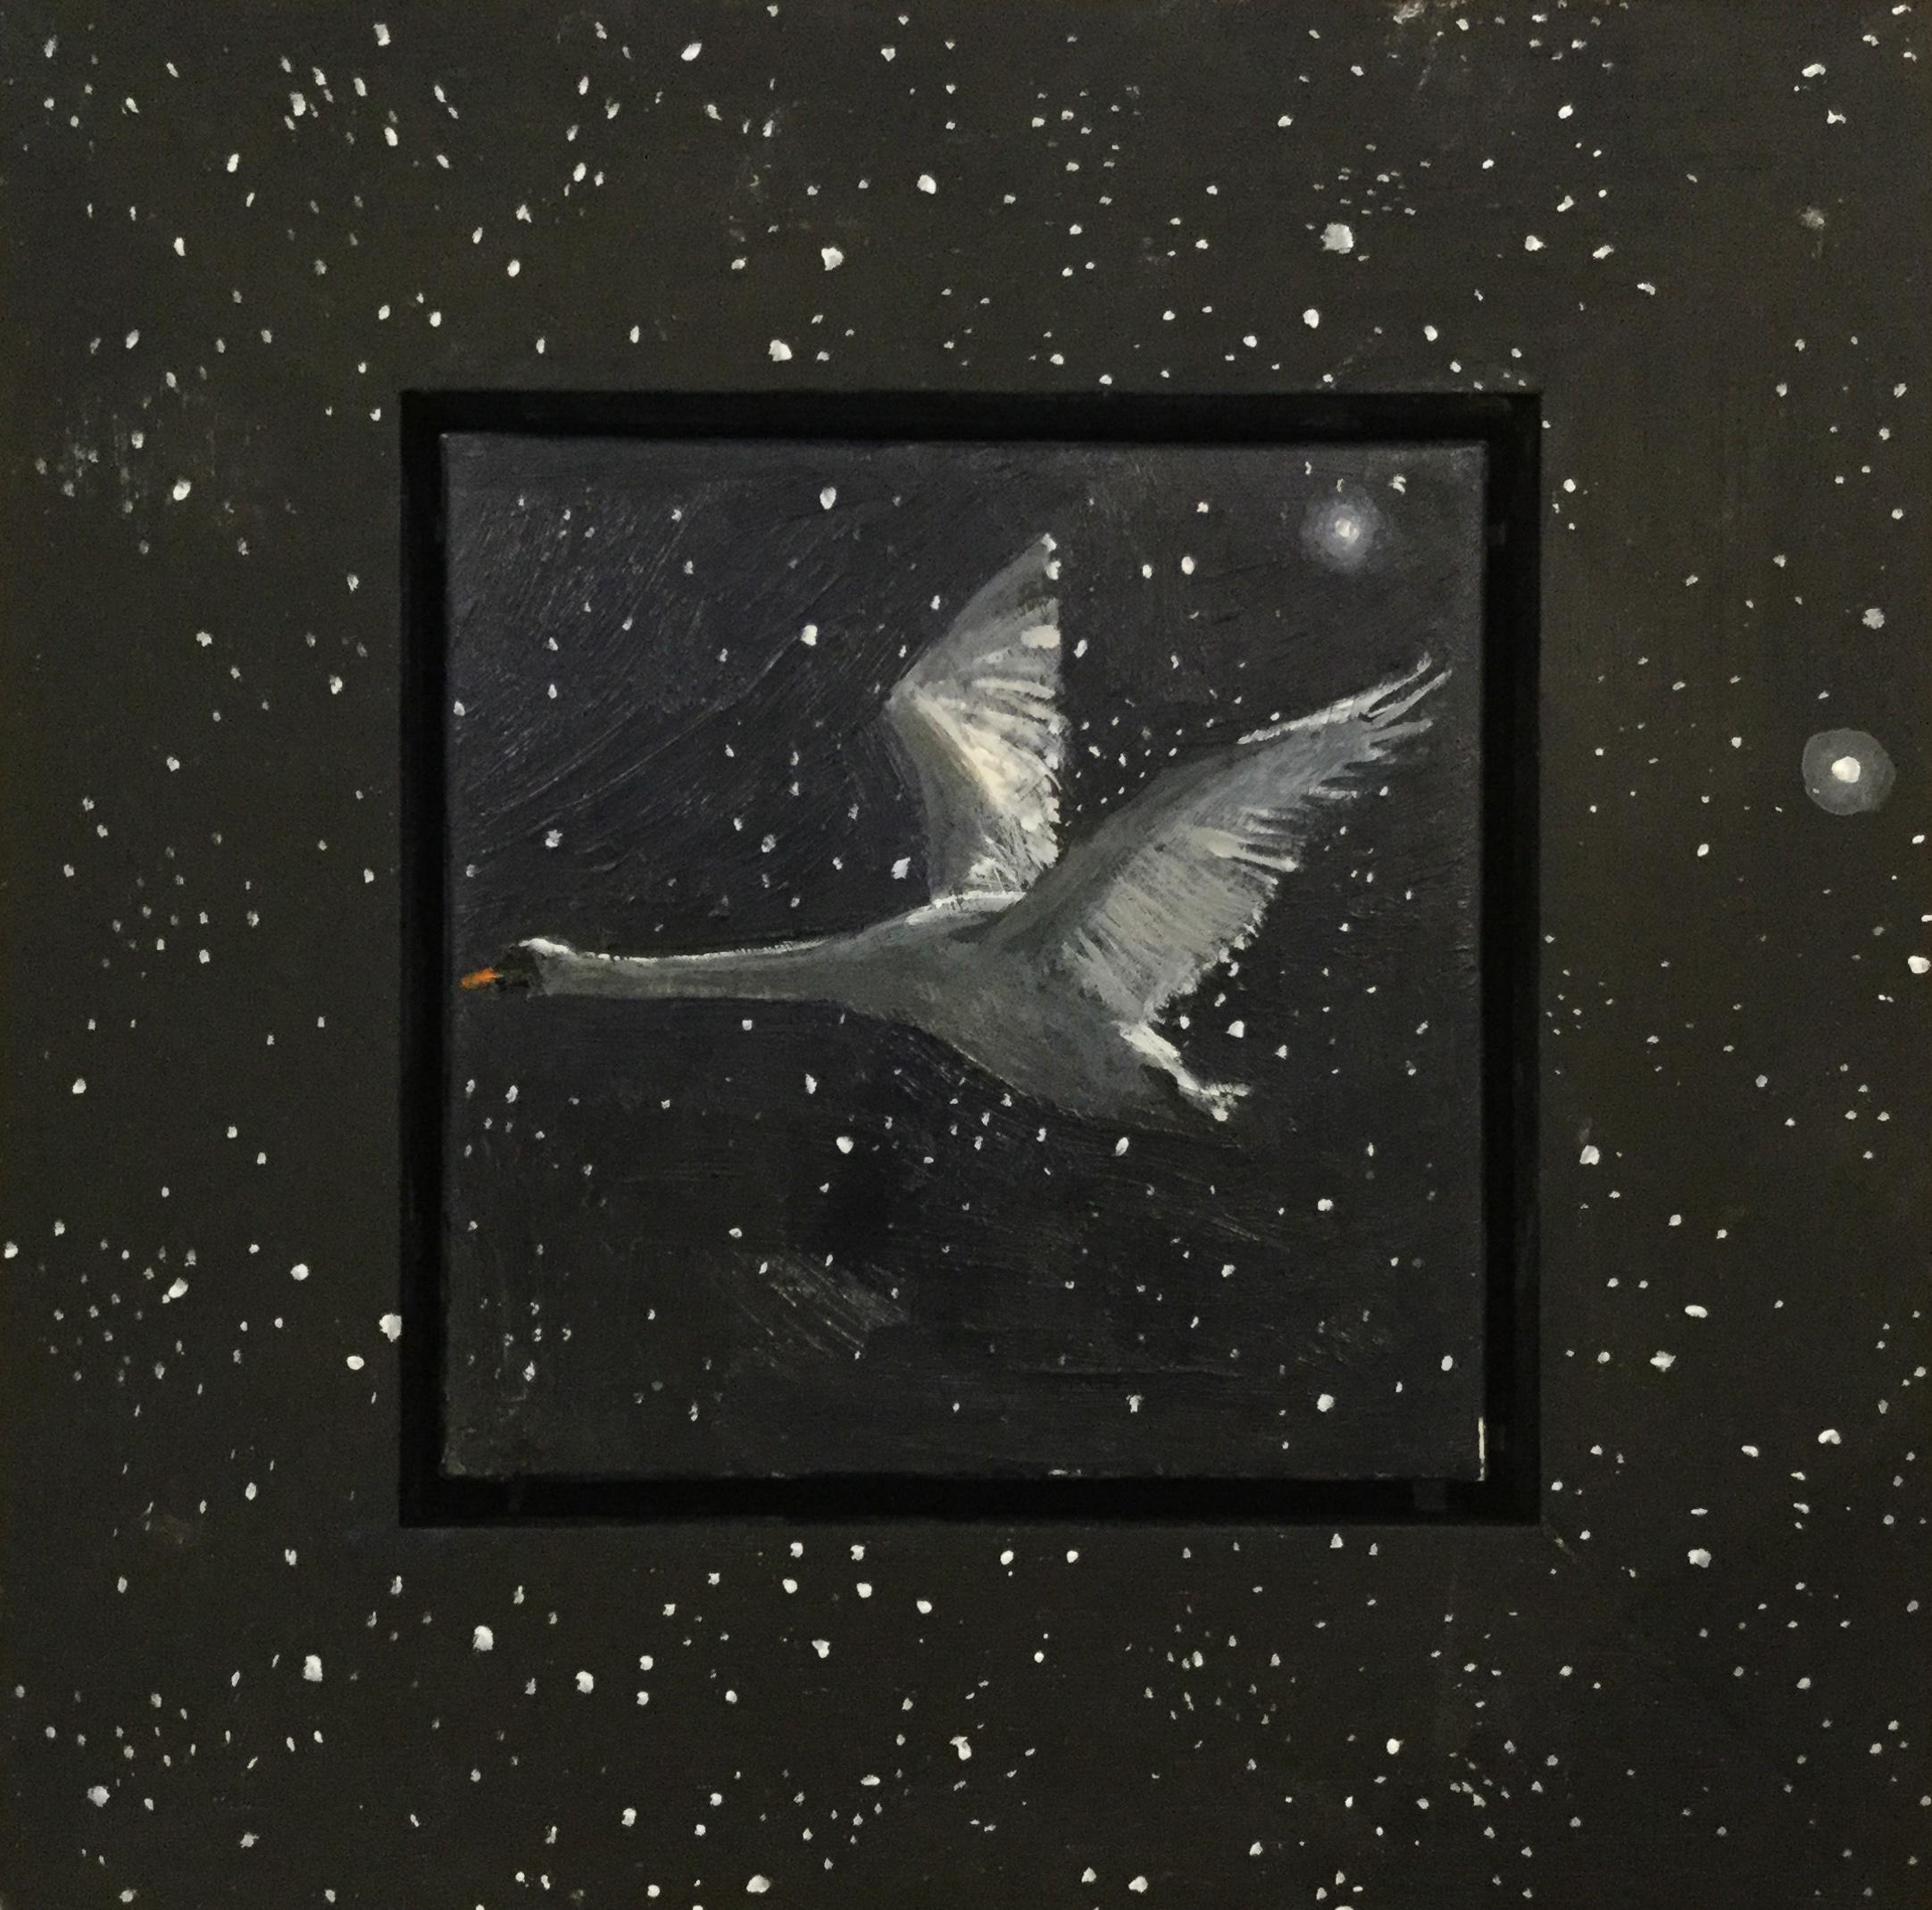 Swan by starlight